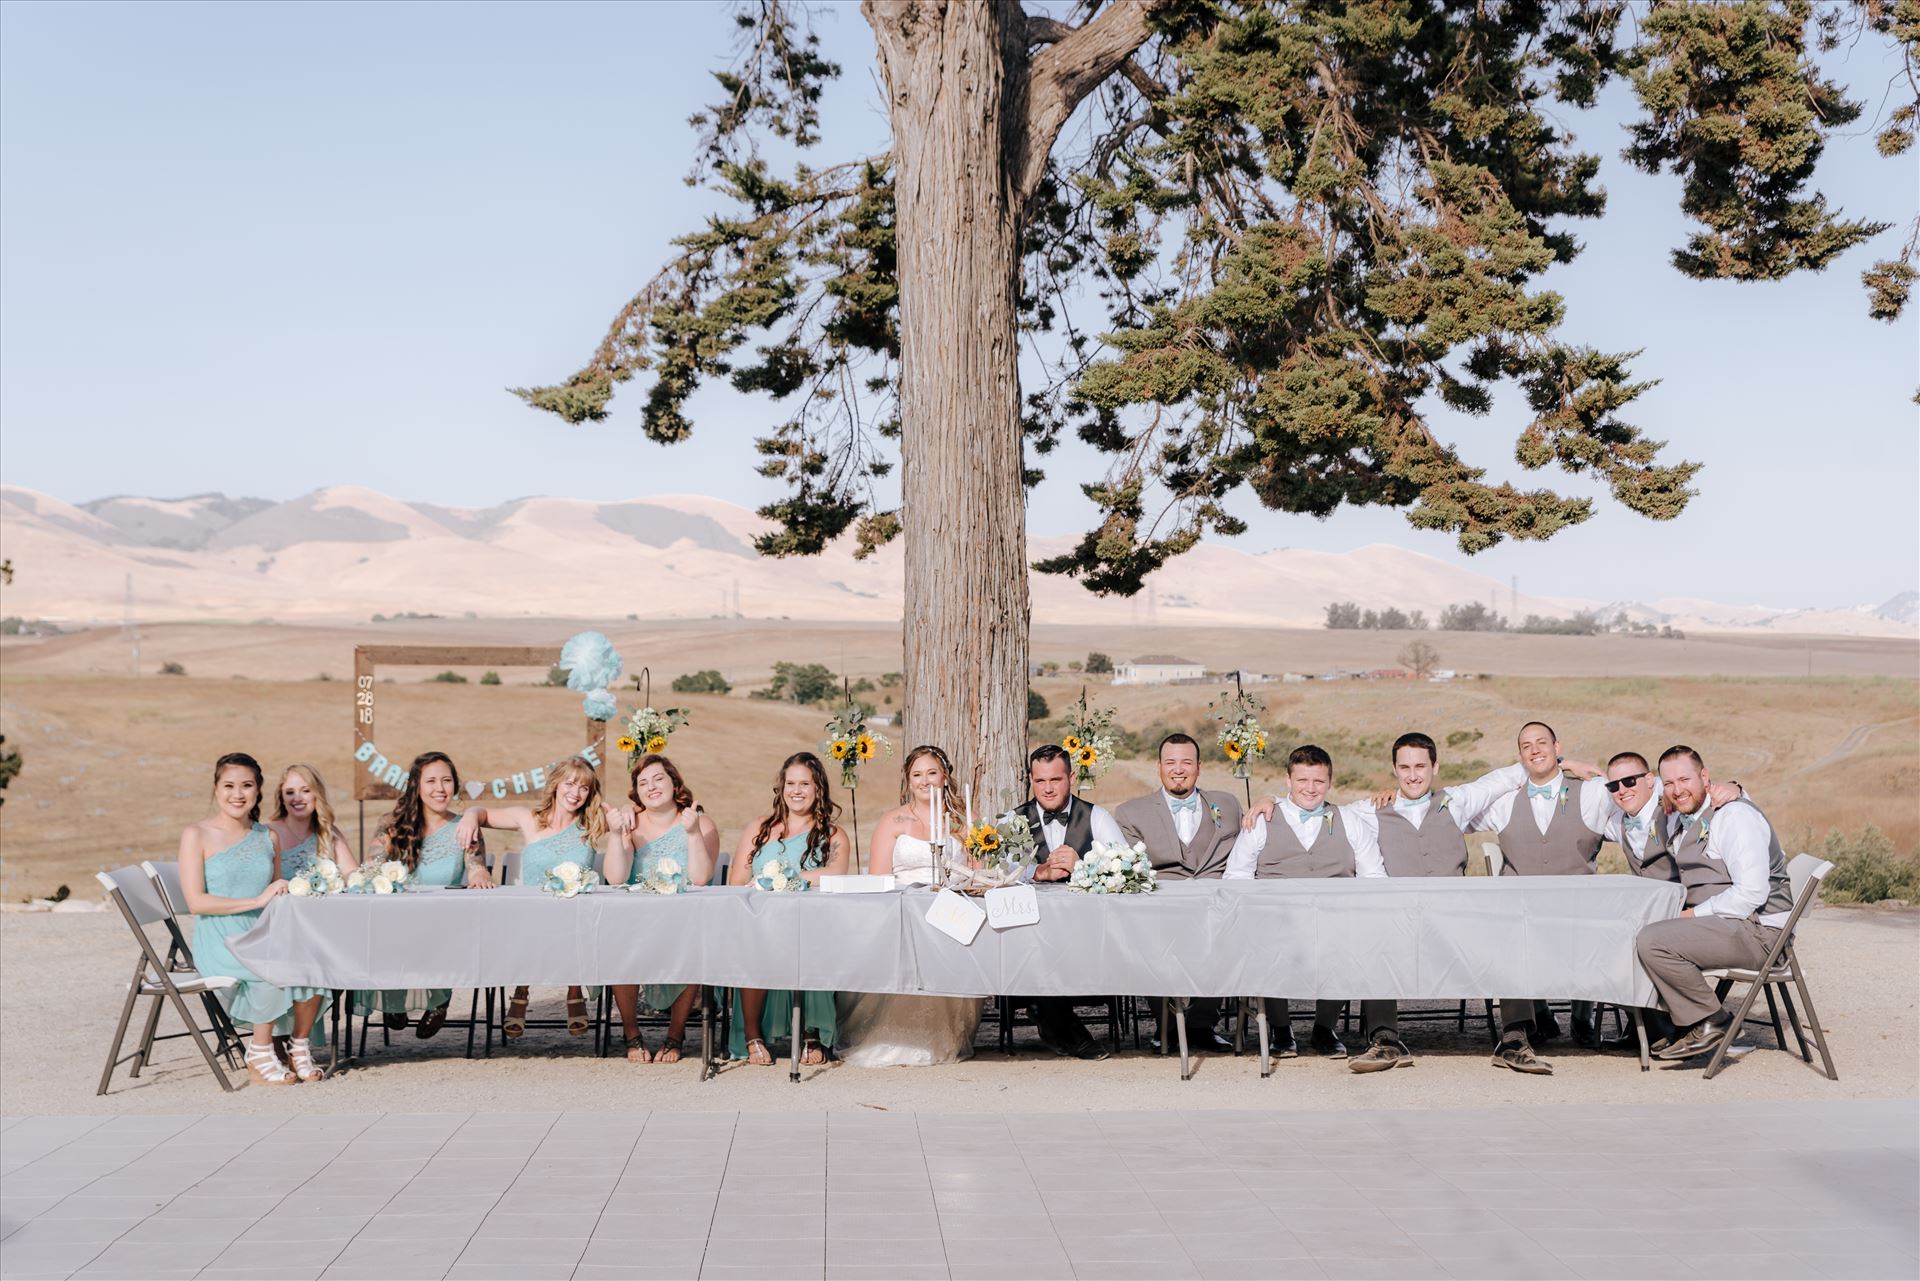 Cherie and Brandon 100 Mirror's Edge Photography, a San Luis Obispo Wedding Photographer, captures a wedding at the Historic Dana Adobe in Nipomo California.  Head Table at the Dana Adobe. by Sarah Williams